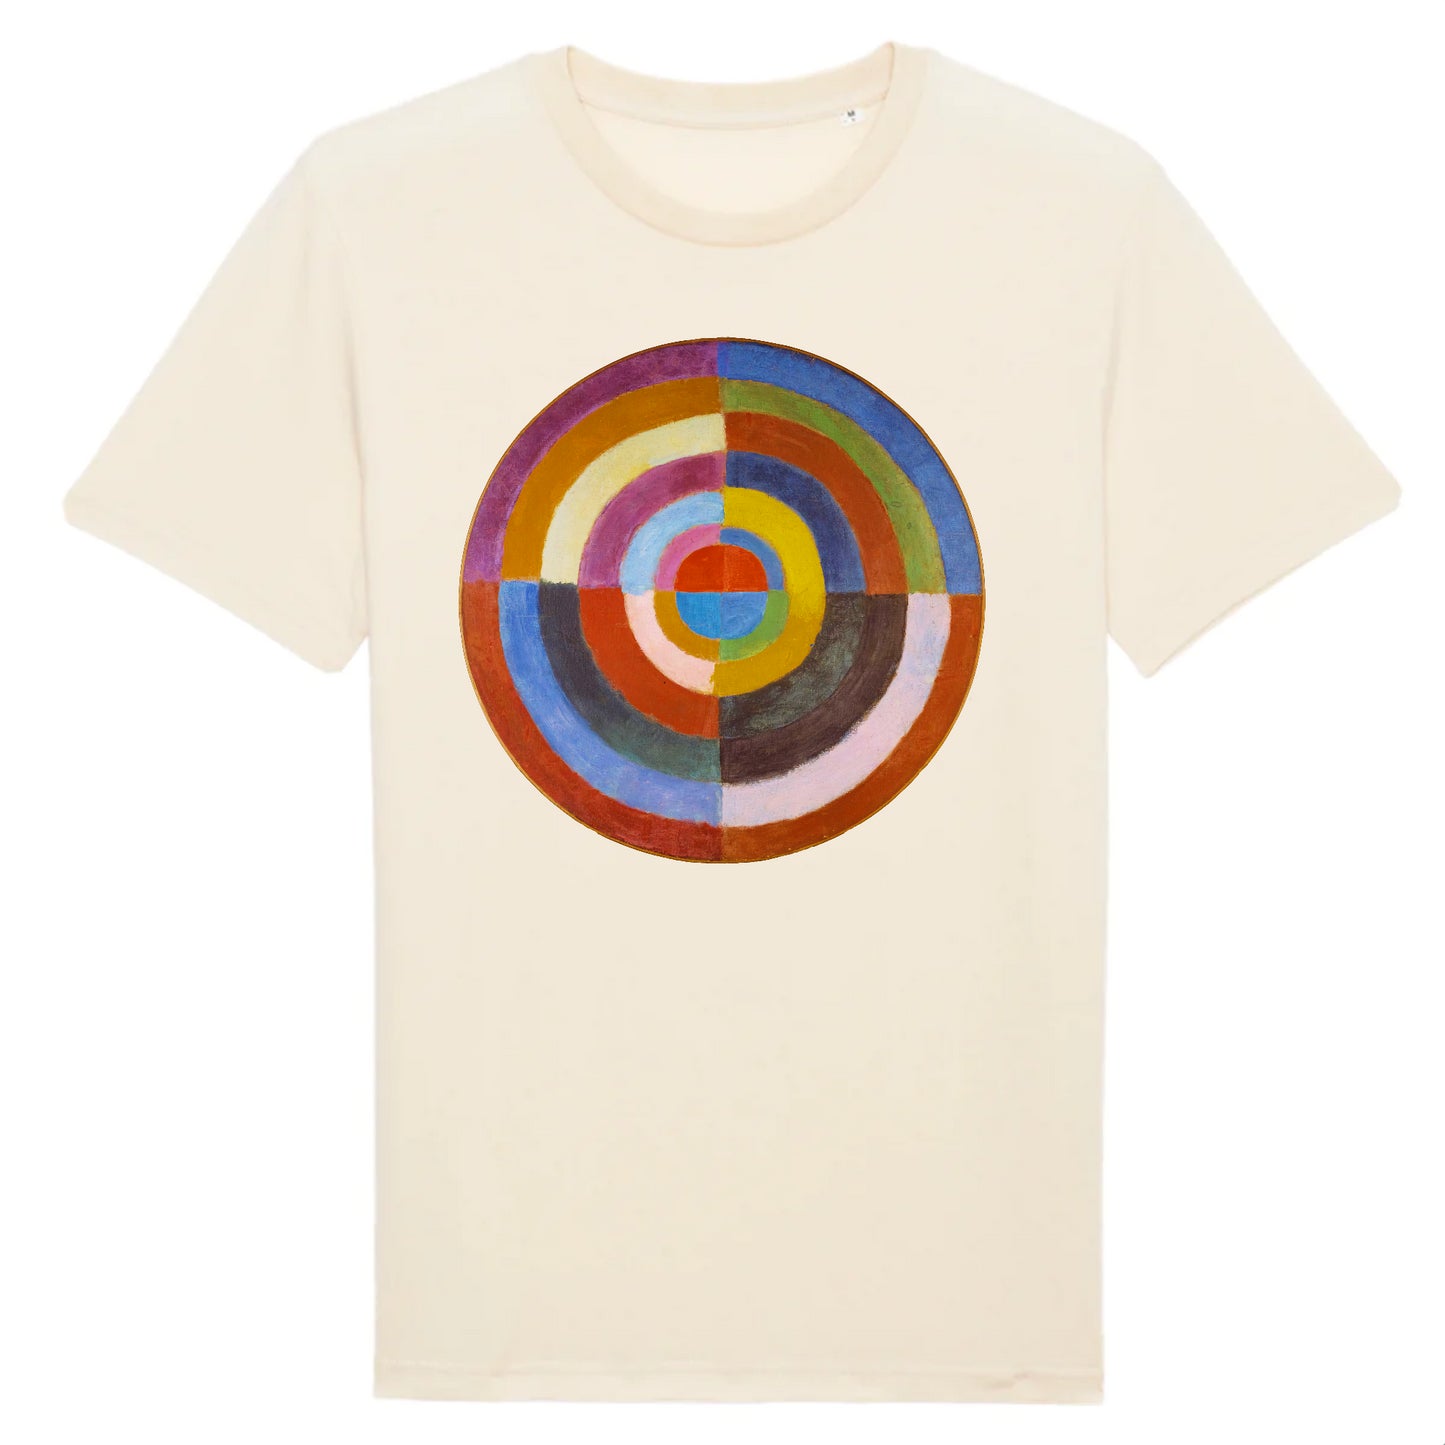 Disque (Le premier disque) by Robert Delaunay, 1913 - Organic Cotton T-Shirt